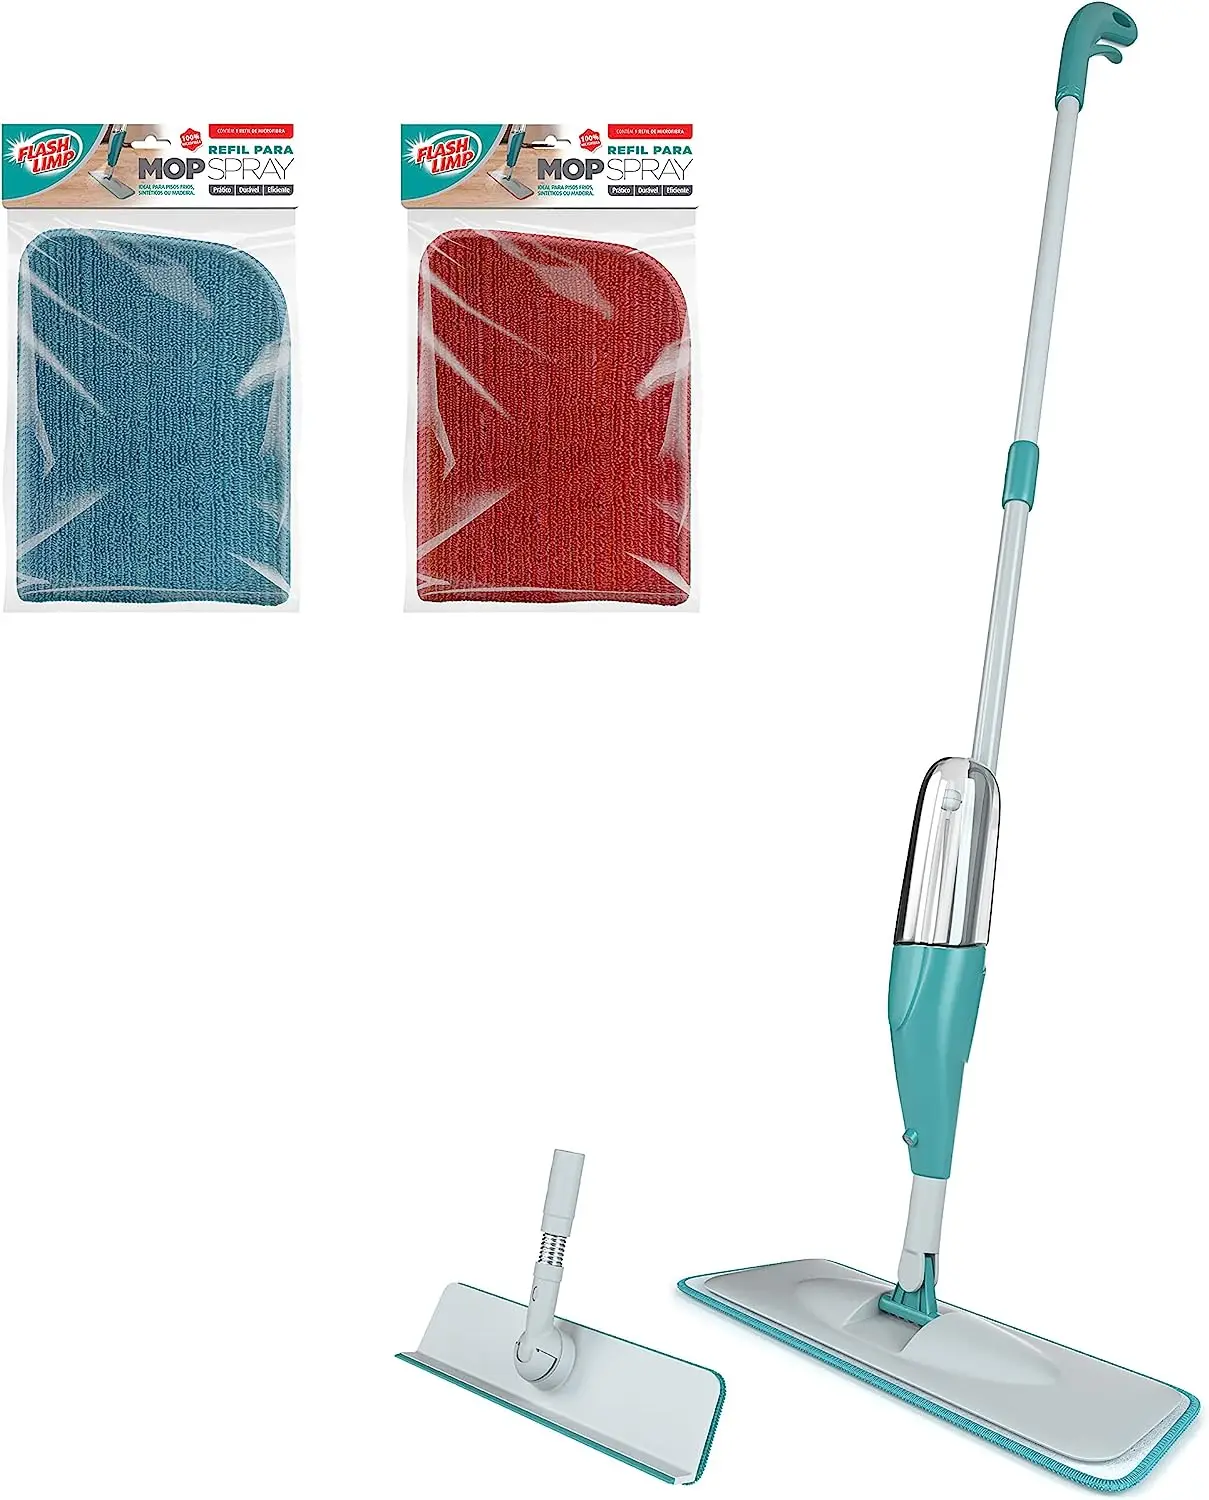 

Limp Kit Mop Spray 2 Em 1 + 2 Refis extra de Microfibra Para Chã, KIT0198, FlashLimp, Verde